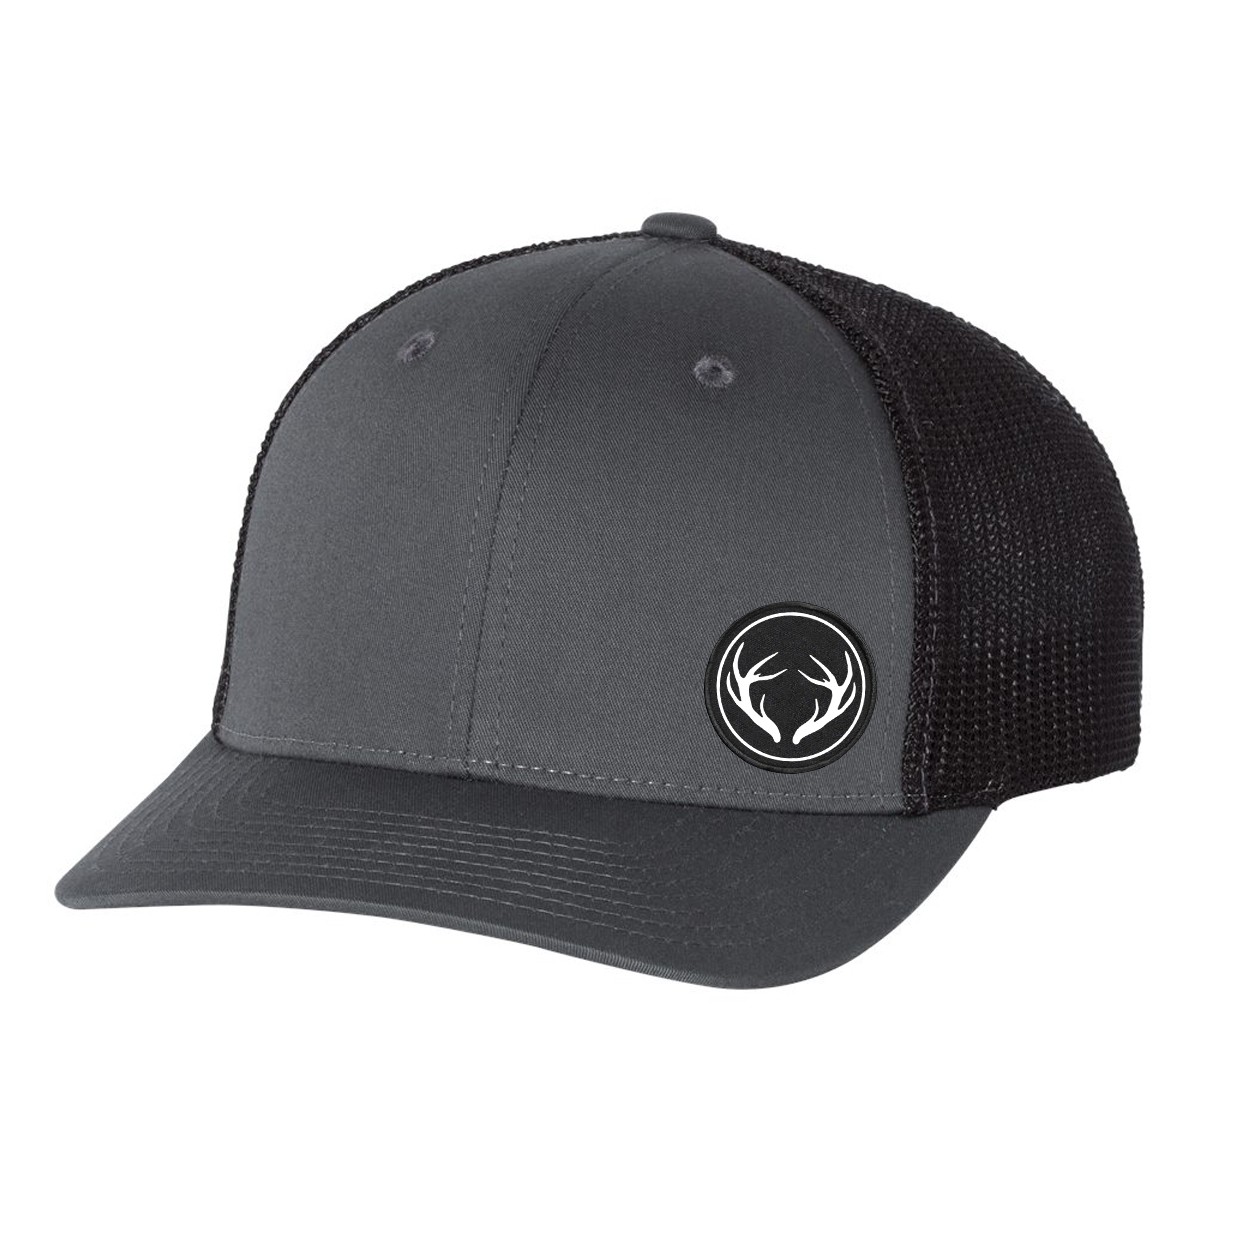 Hunt Rack Icon Logo Night Out Woven Circle Patch Snapback Trucker Hat Dark Gray/Black (White Logo)